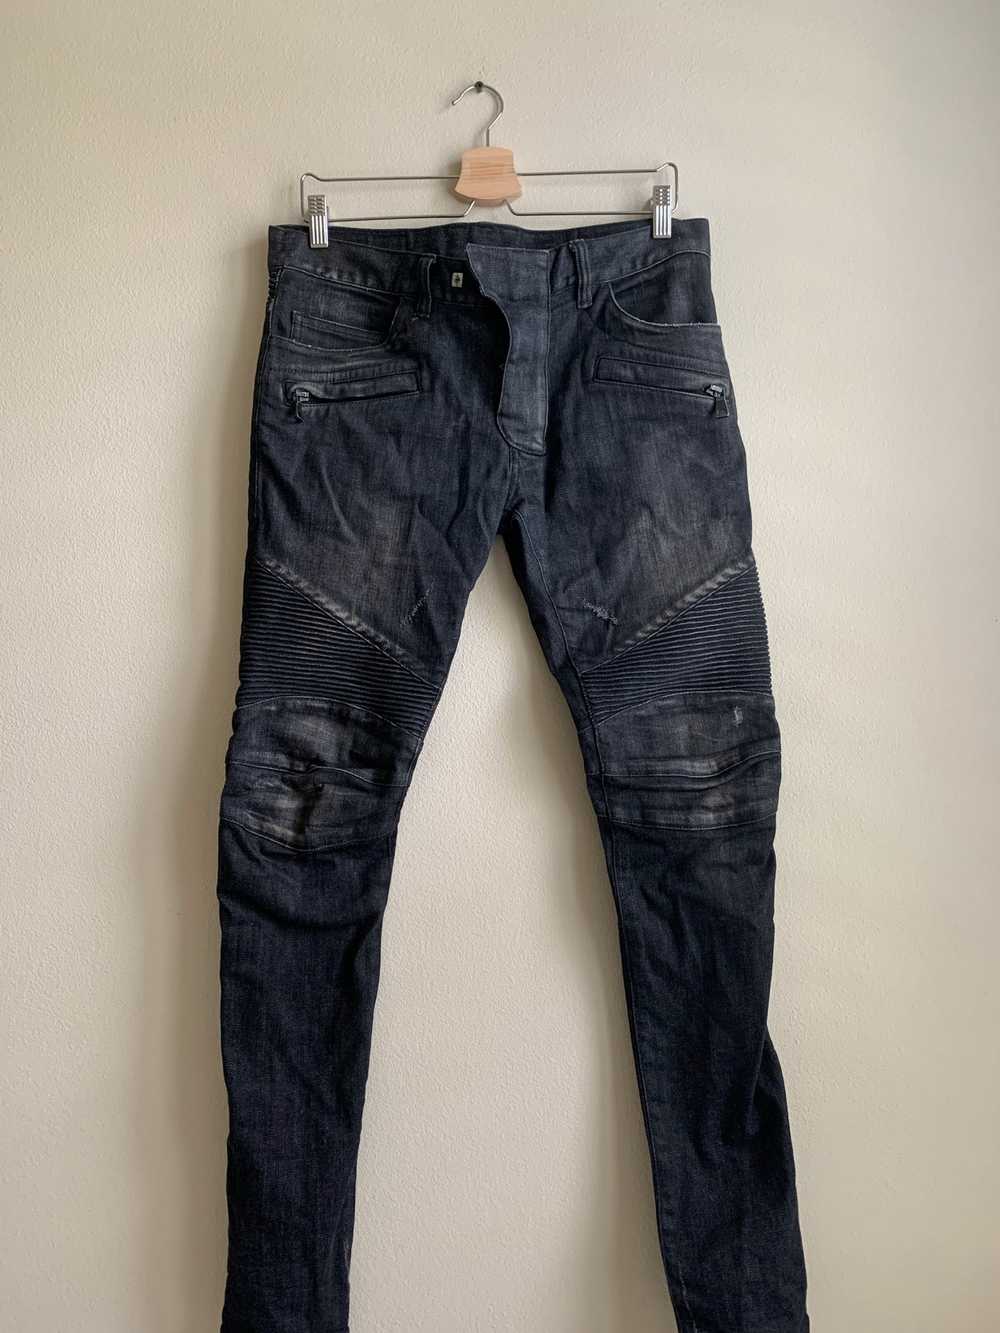 Balmain BALMAIN Ribbed Patches Slim Jeans - image 1